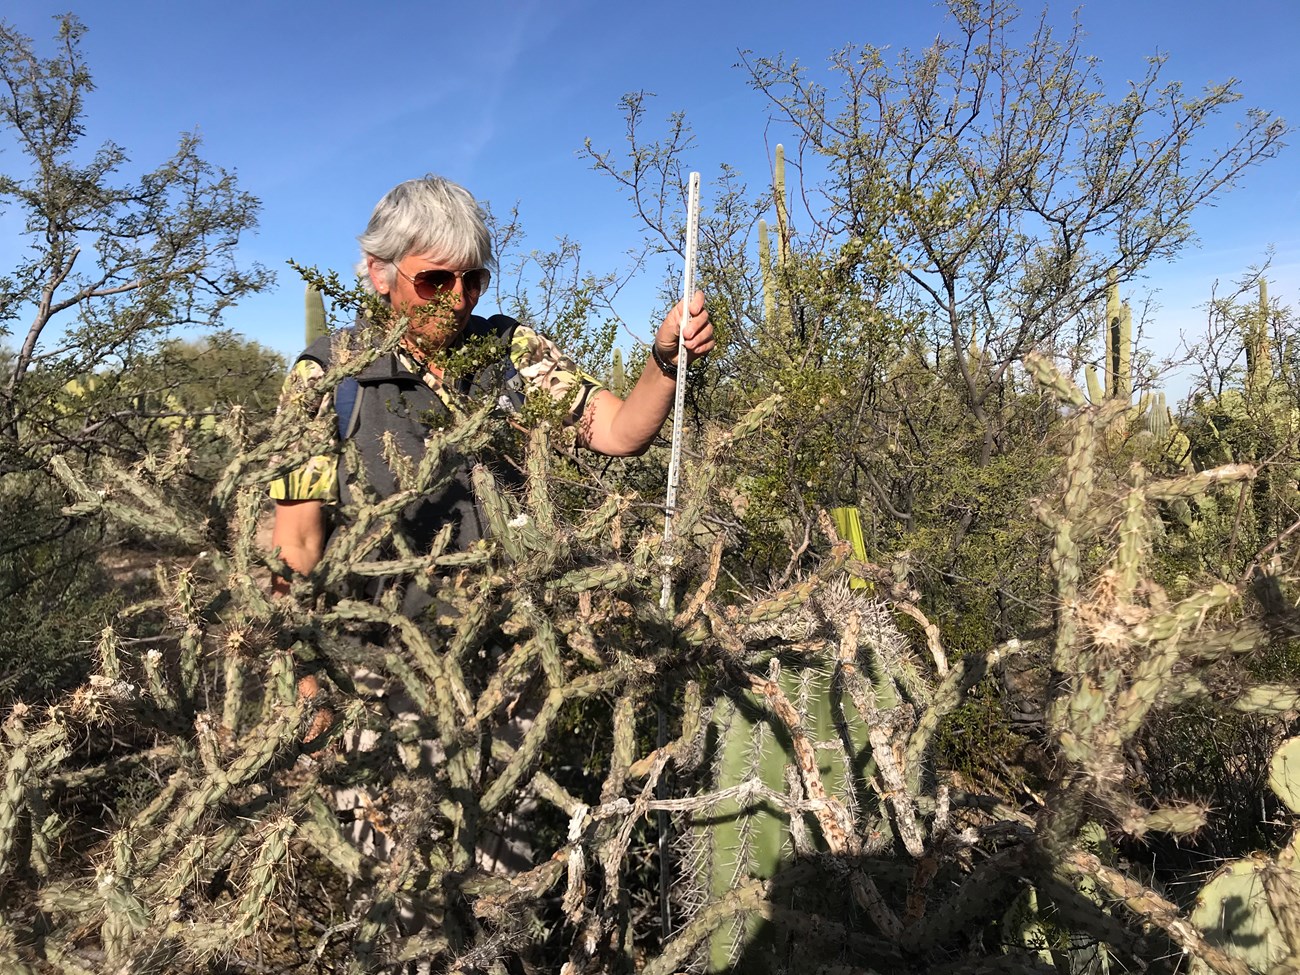 Volunteer navigates cholla cactus to measure saguaro